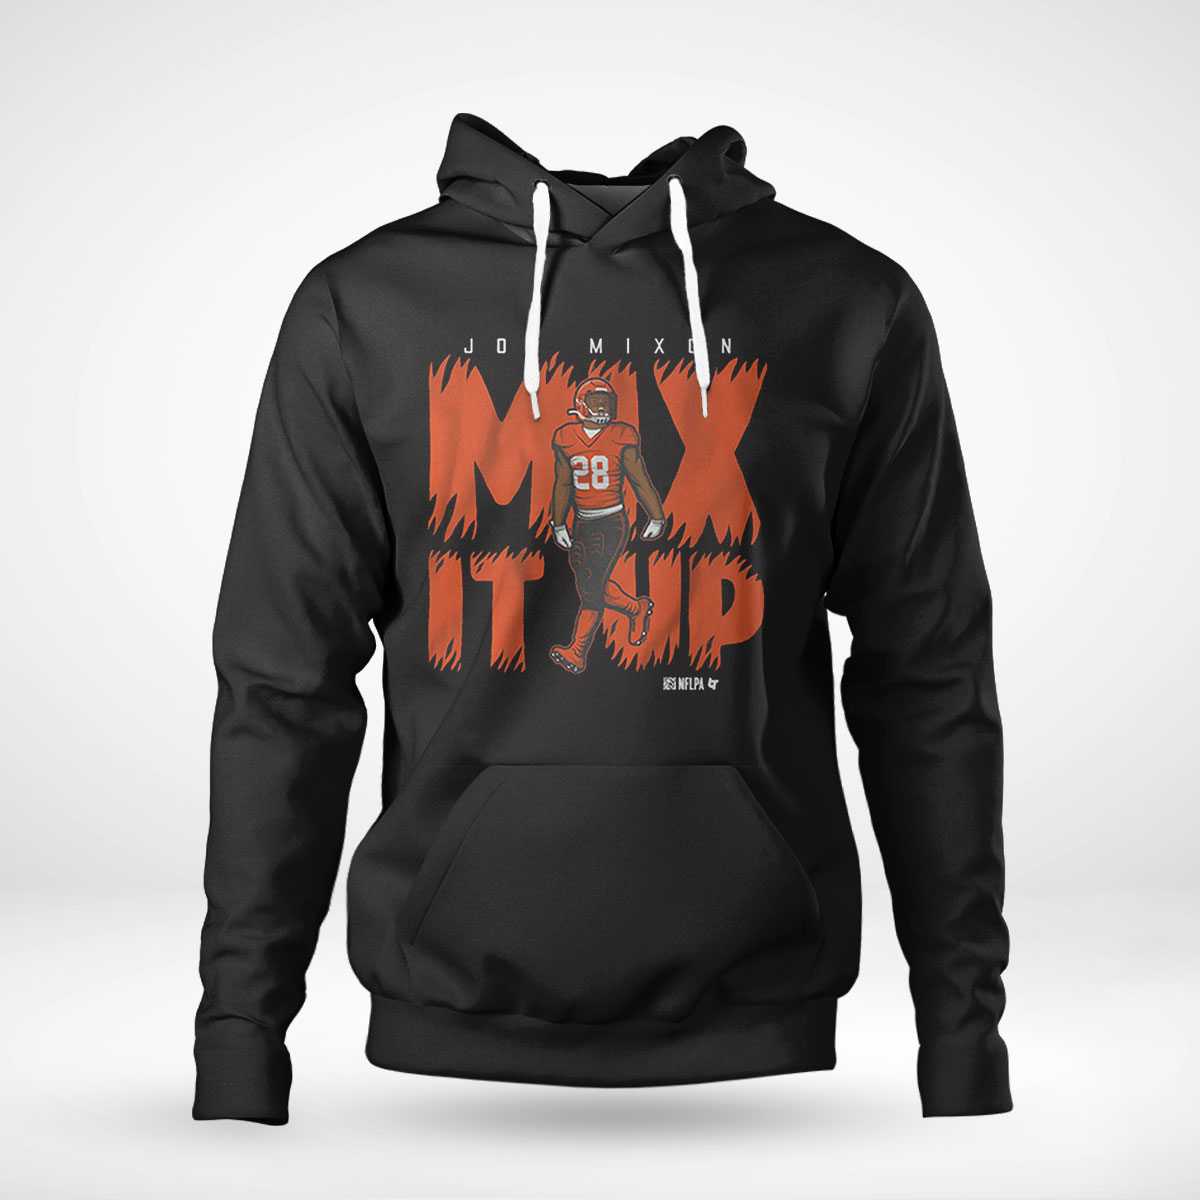 Joe Mixon Mix It Up Shirt Hoodie Sweatshirt, Tank Top, Ladies Tee